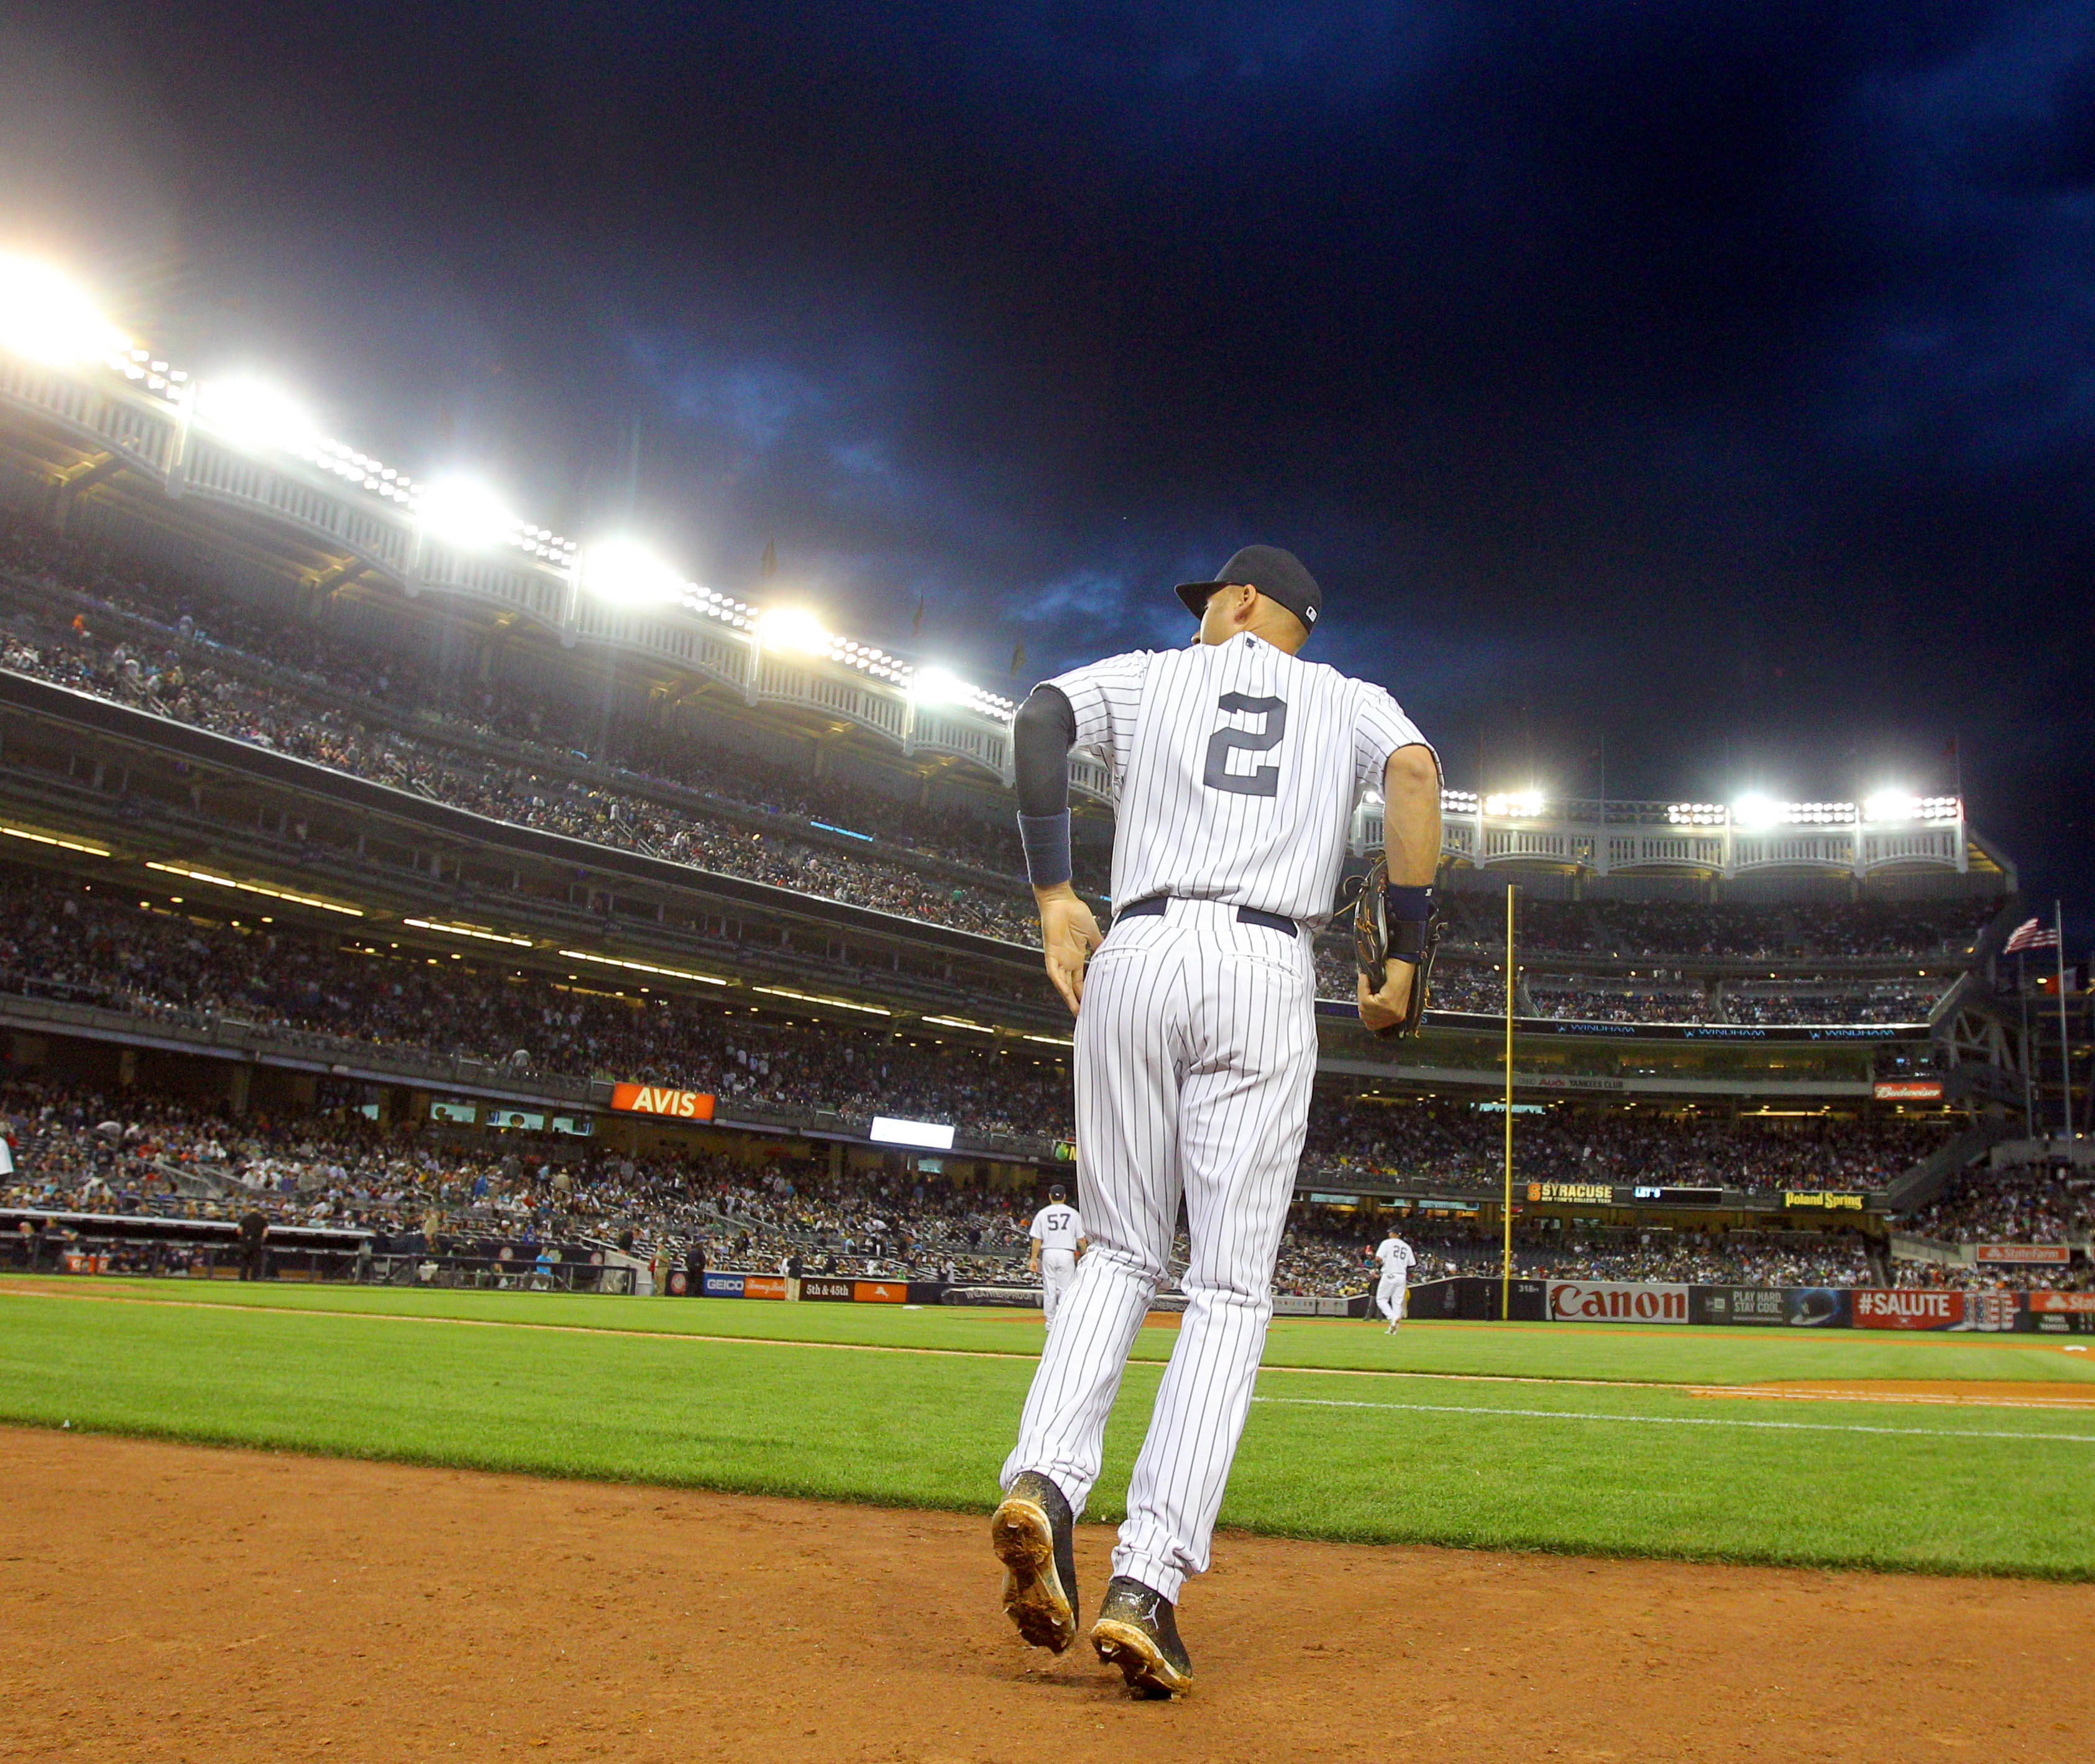 Jeter tops MLB jersey sales in his final season